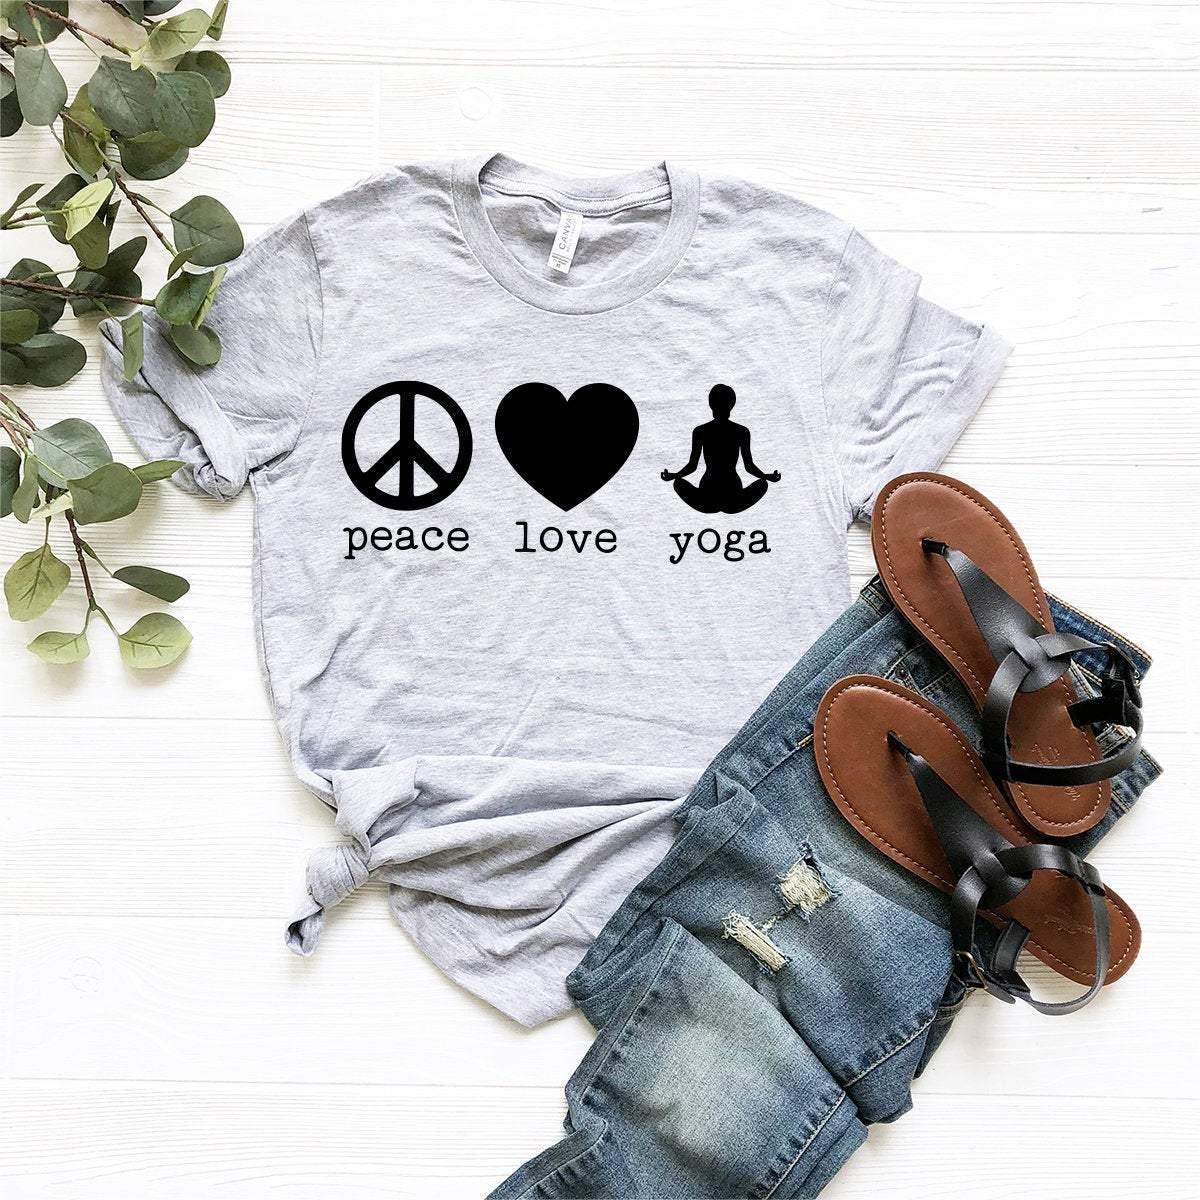 Peace Love Yoga Tee, Yoga Shirt, Meditation Shirt, Yoga T-Shirt, Yoga Lover Shirt, Inspirational Shirt, Yoga Tee, Yoga Gift, Meditation Tee - Fastdeliverytees.com